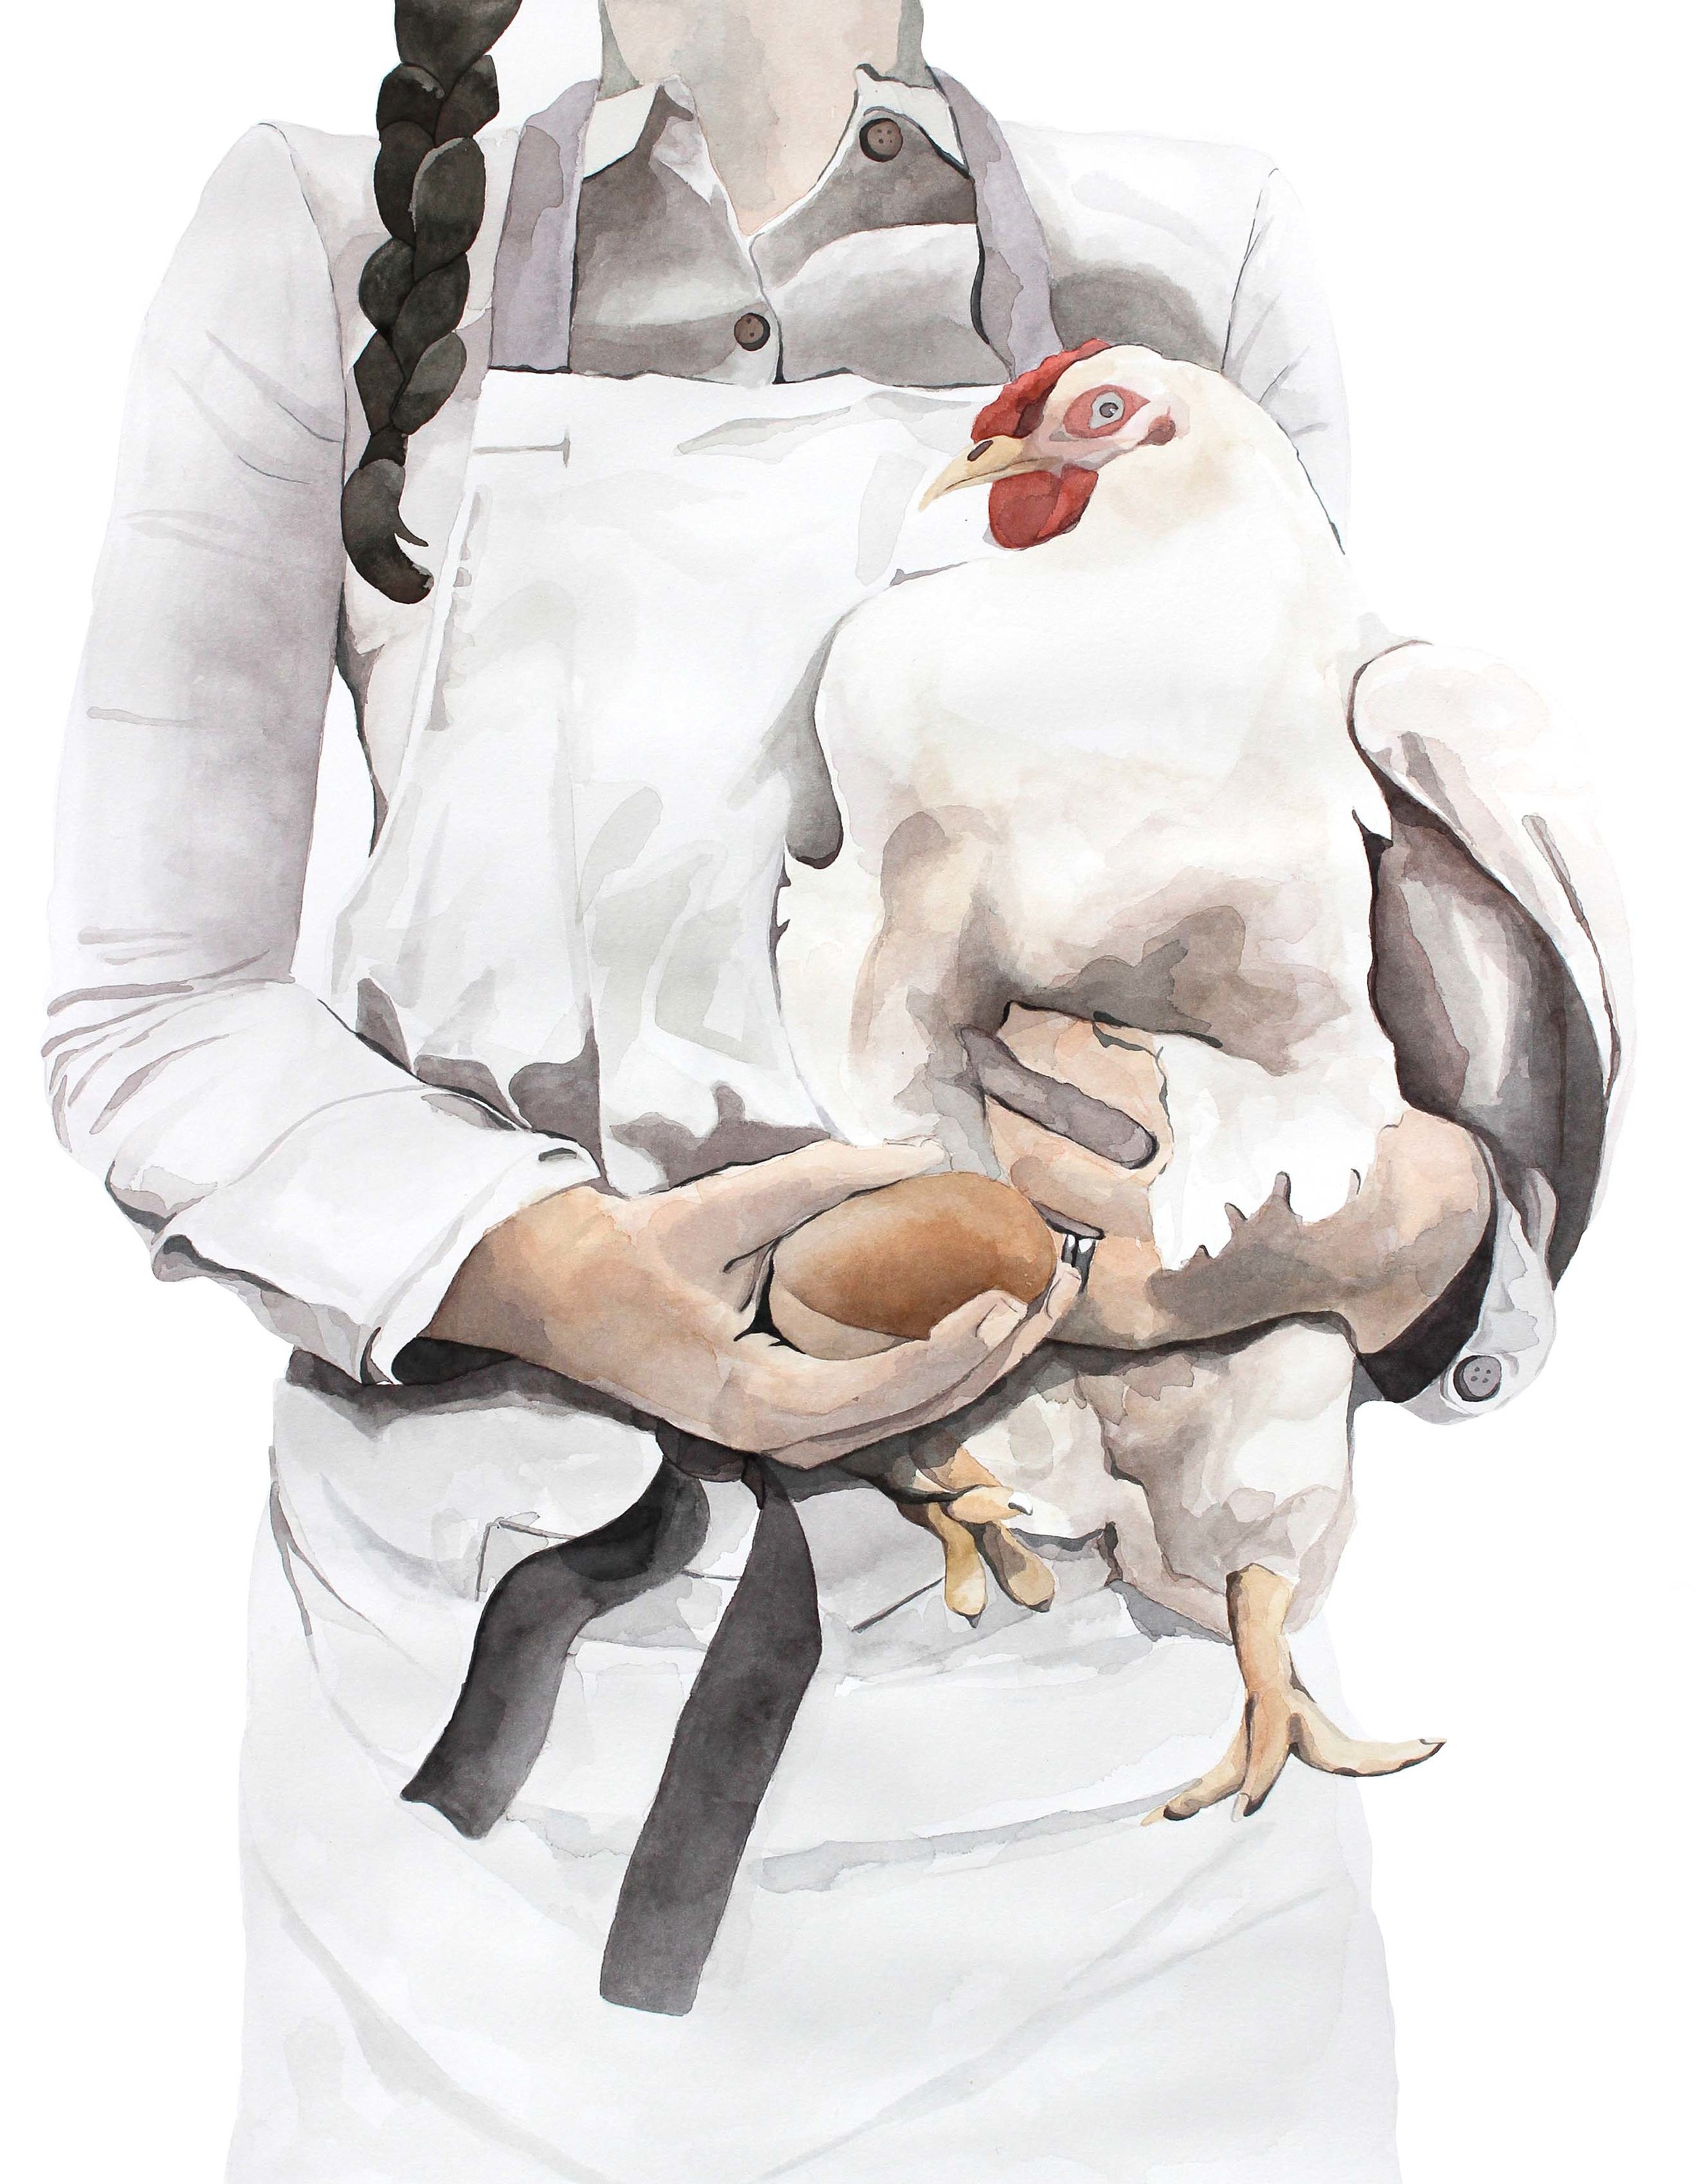 Chicken woman image - web.jpg